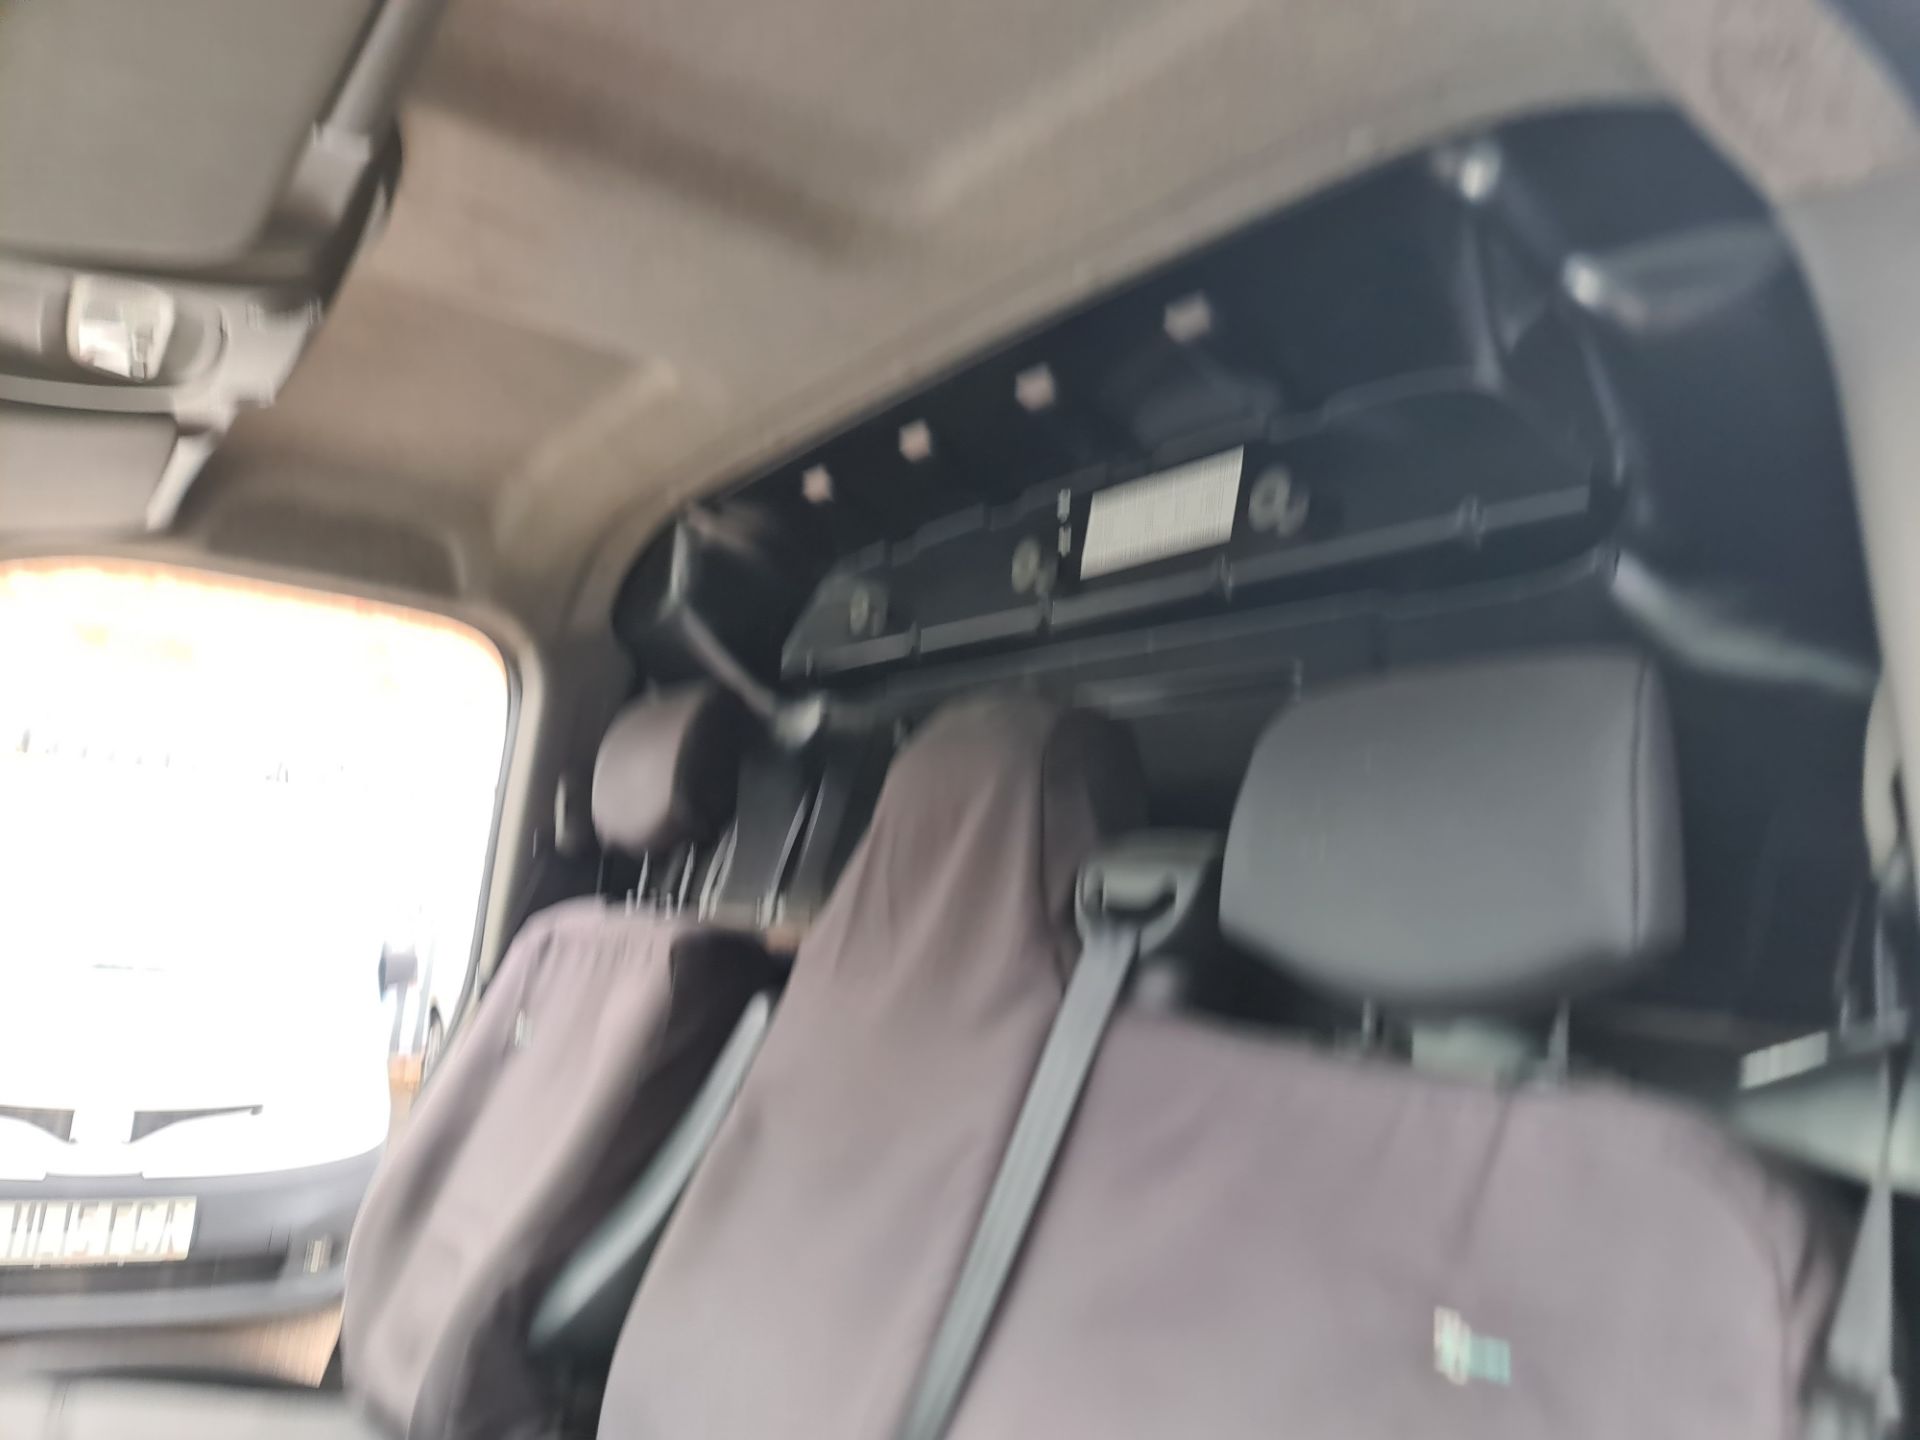 2015 Nissan NV400 SE DCI panel van - Image 54 of 74